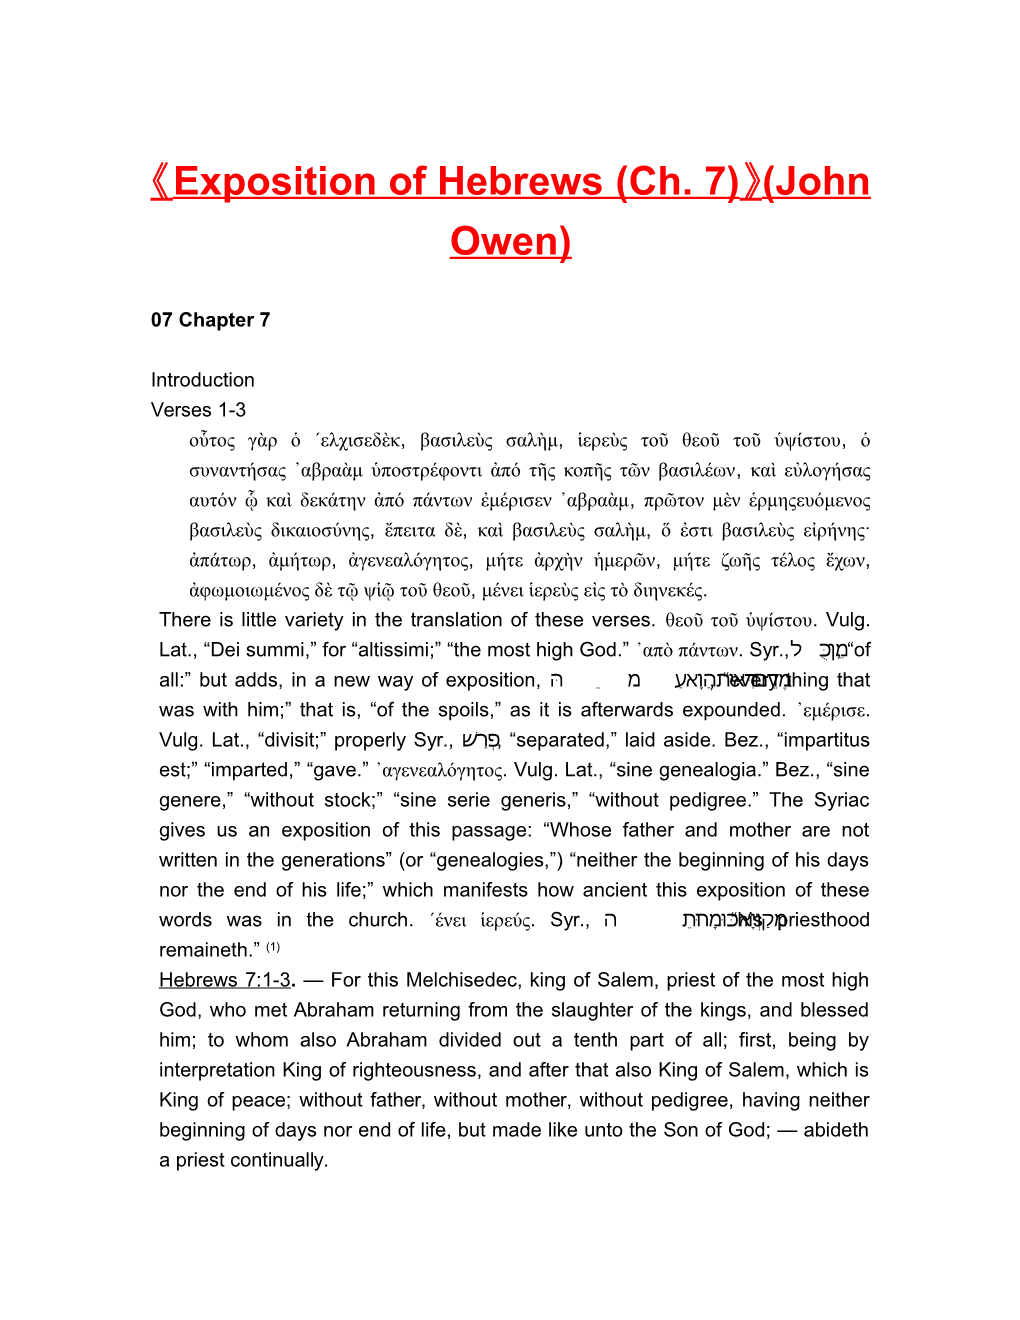 Exposition of Hebrews (Ch. 7) (John Owen)